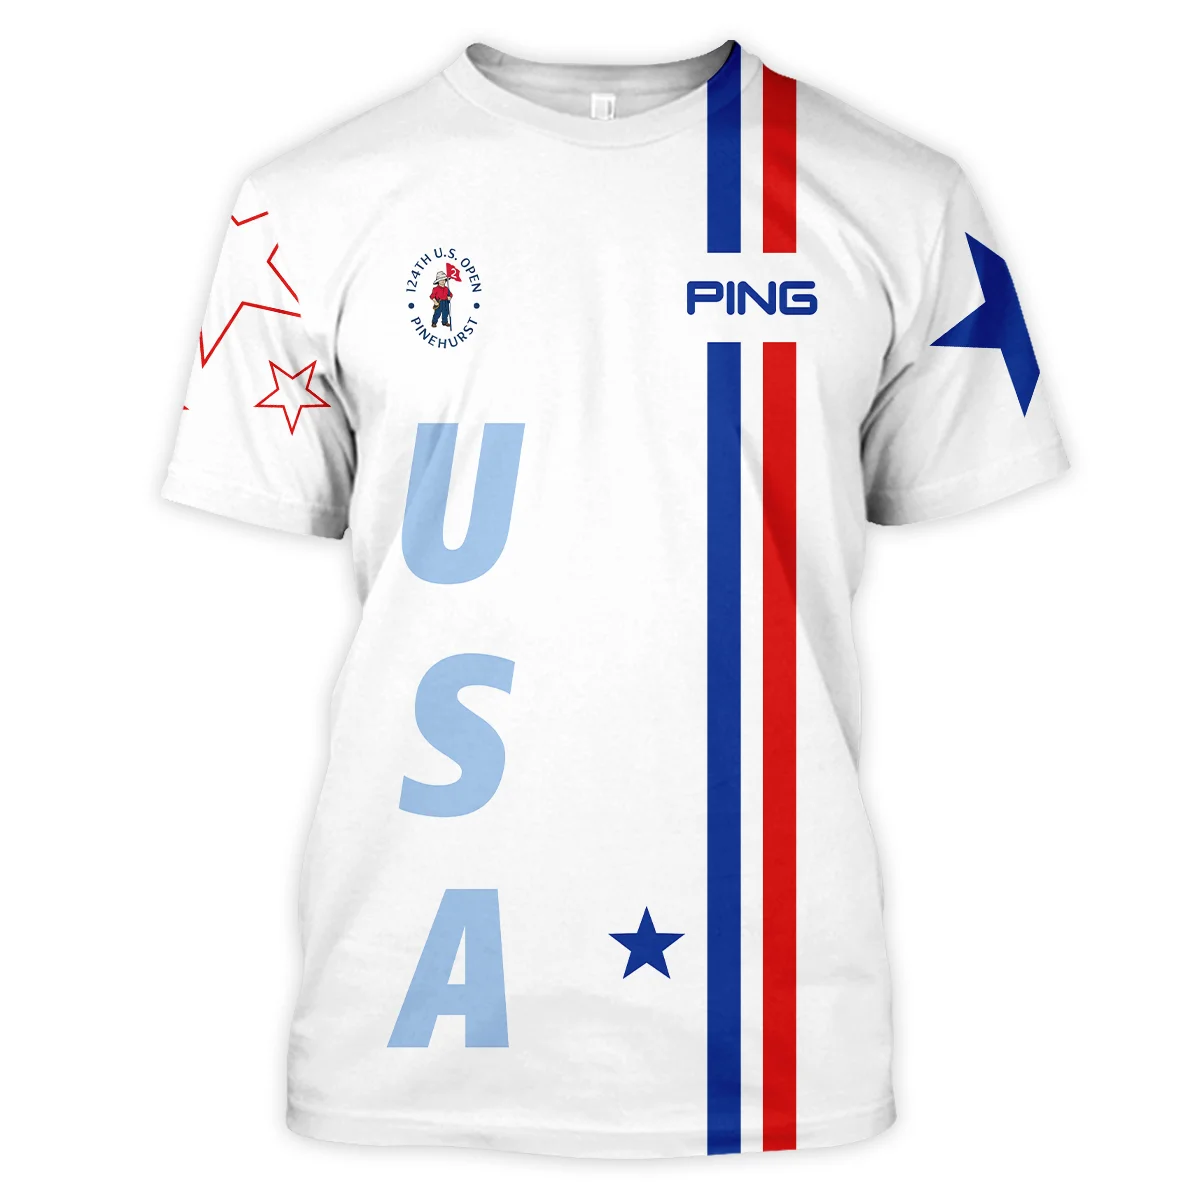 124th U.S. Open Pinehurst Ping Blue Red Line White Unisex T-Shirt Style Classic T-Shirt